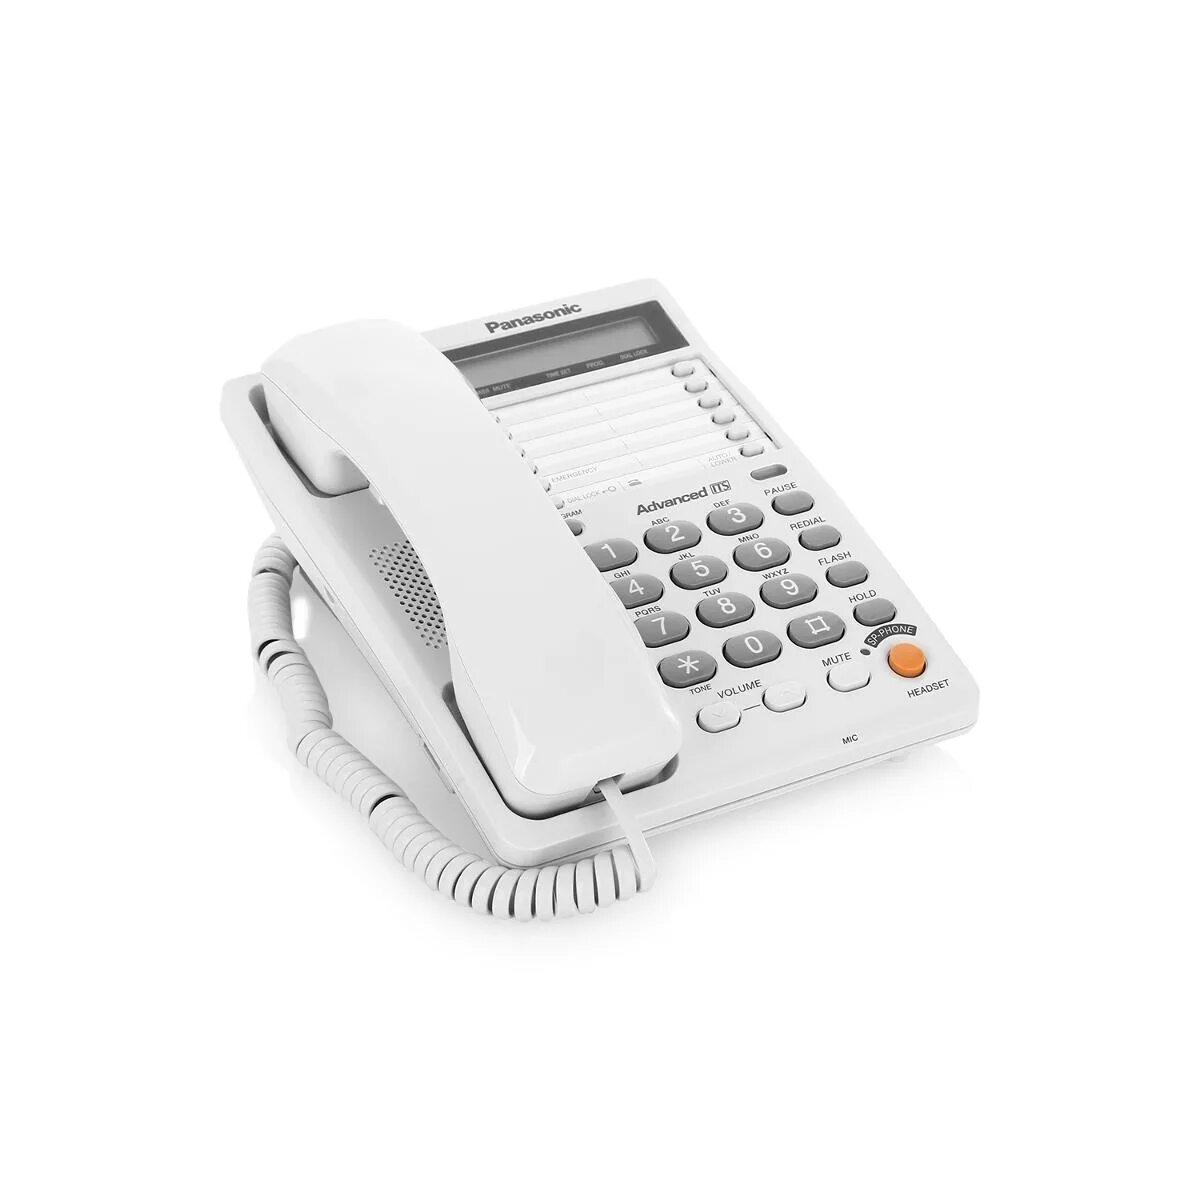 Panasonic KX-ts2365ruw. Проводной телефон Панасоник KX-ts2365ruw. Телефон Panasonic KX-ts2365ruw, белый. Panasonic марки KX-ts2365ruw. Телефон panasonic kx ts2365ruw